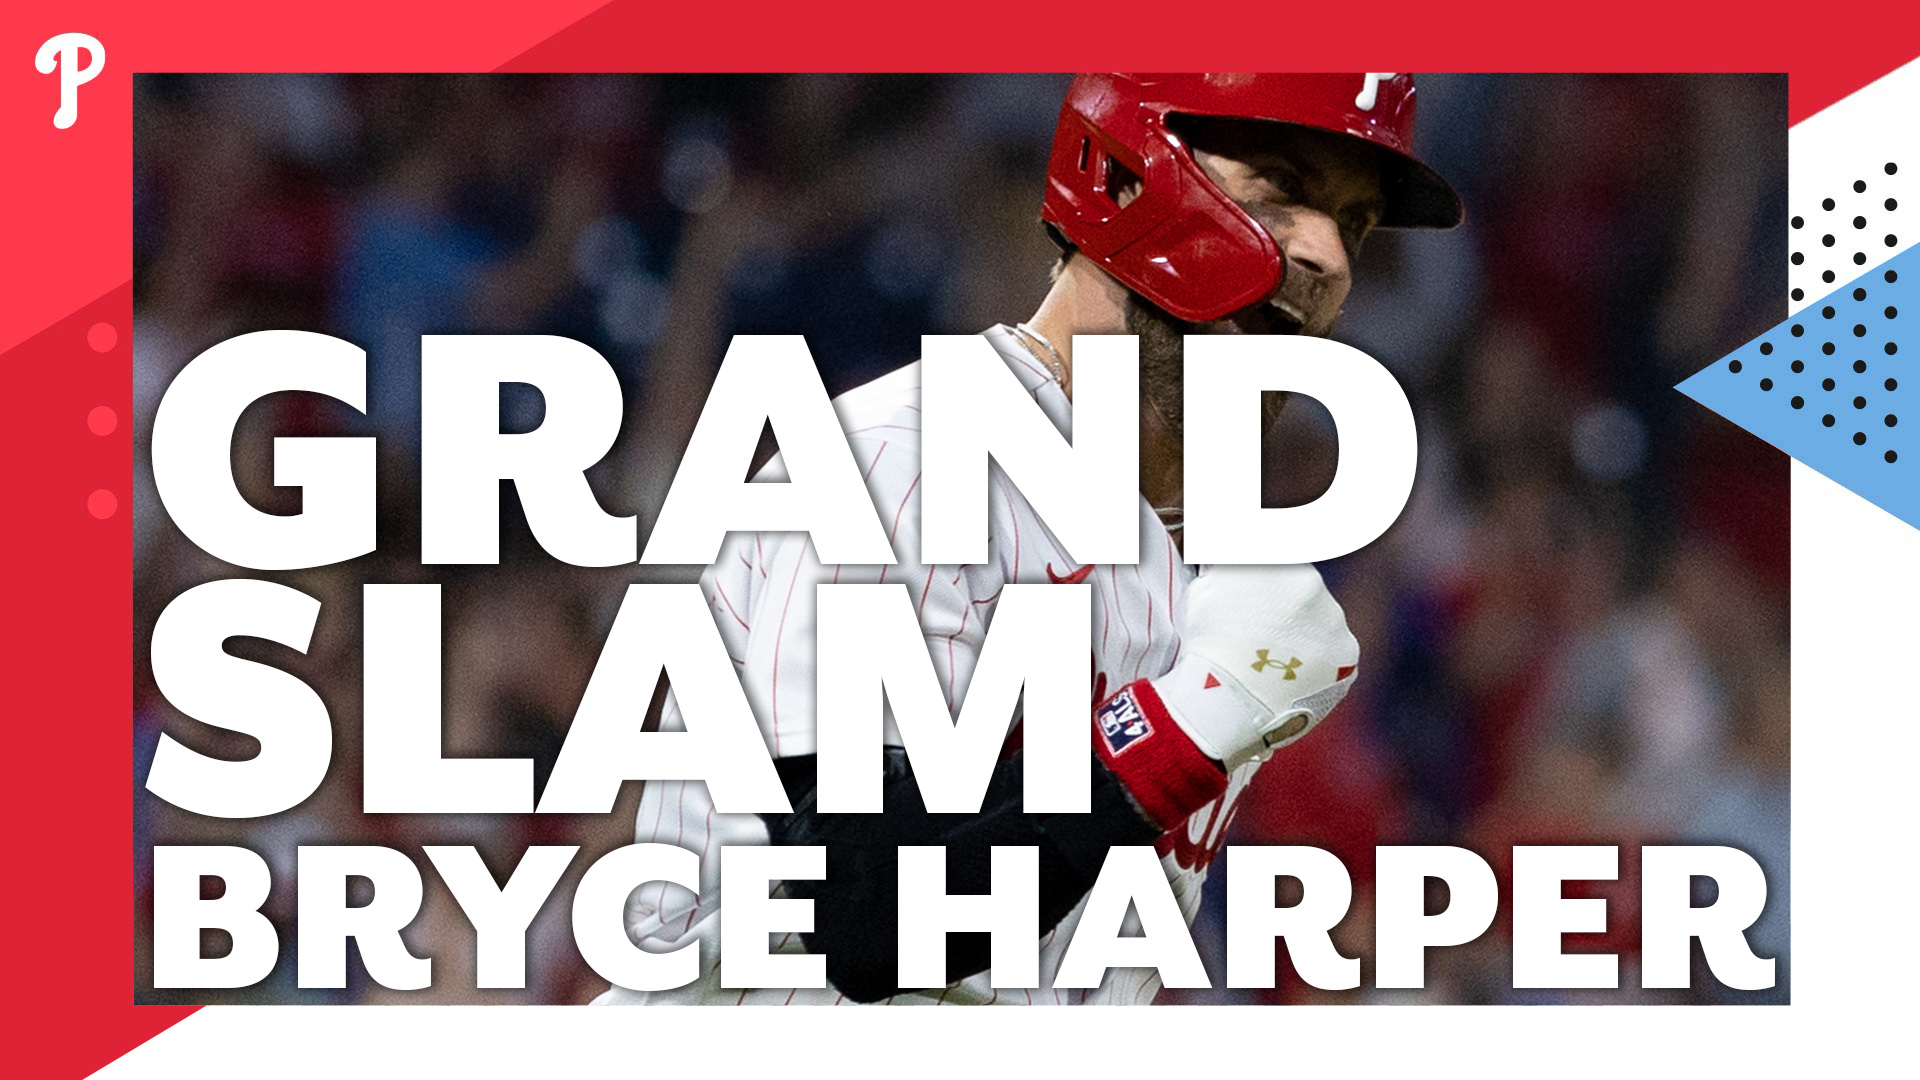 GRAND SLAM! Bryce Harper BLASTS upper-deck game tying grand slam